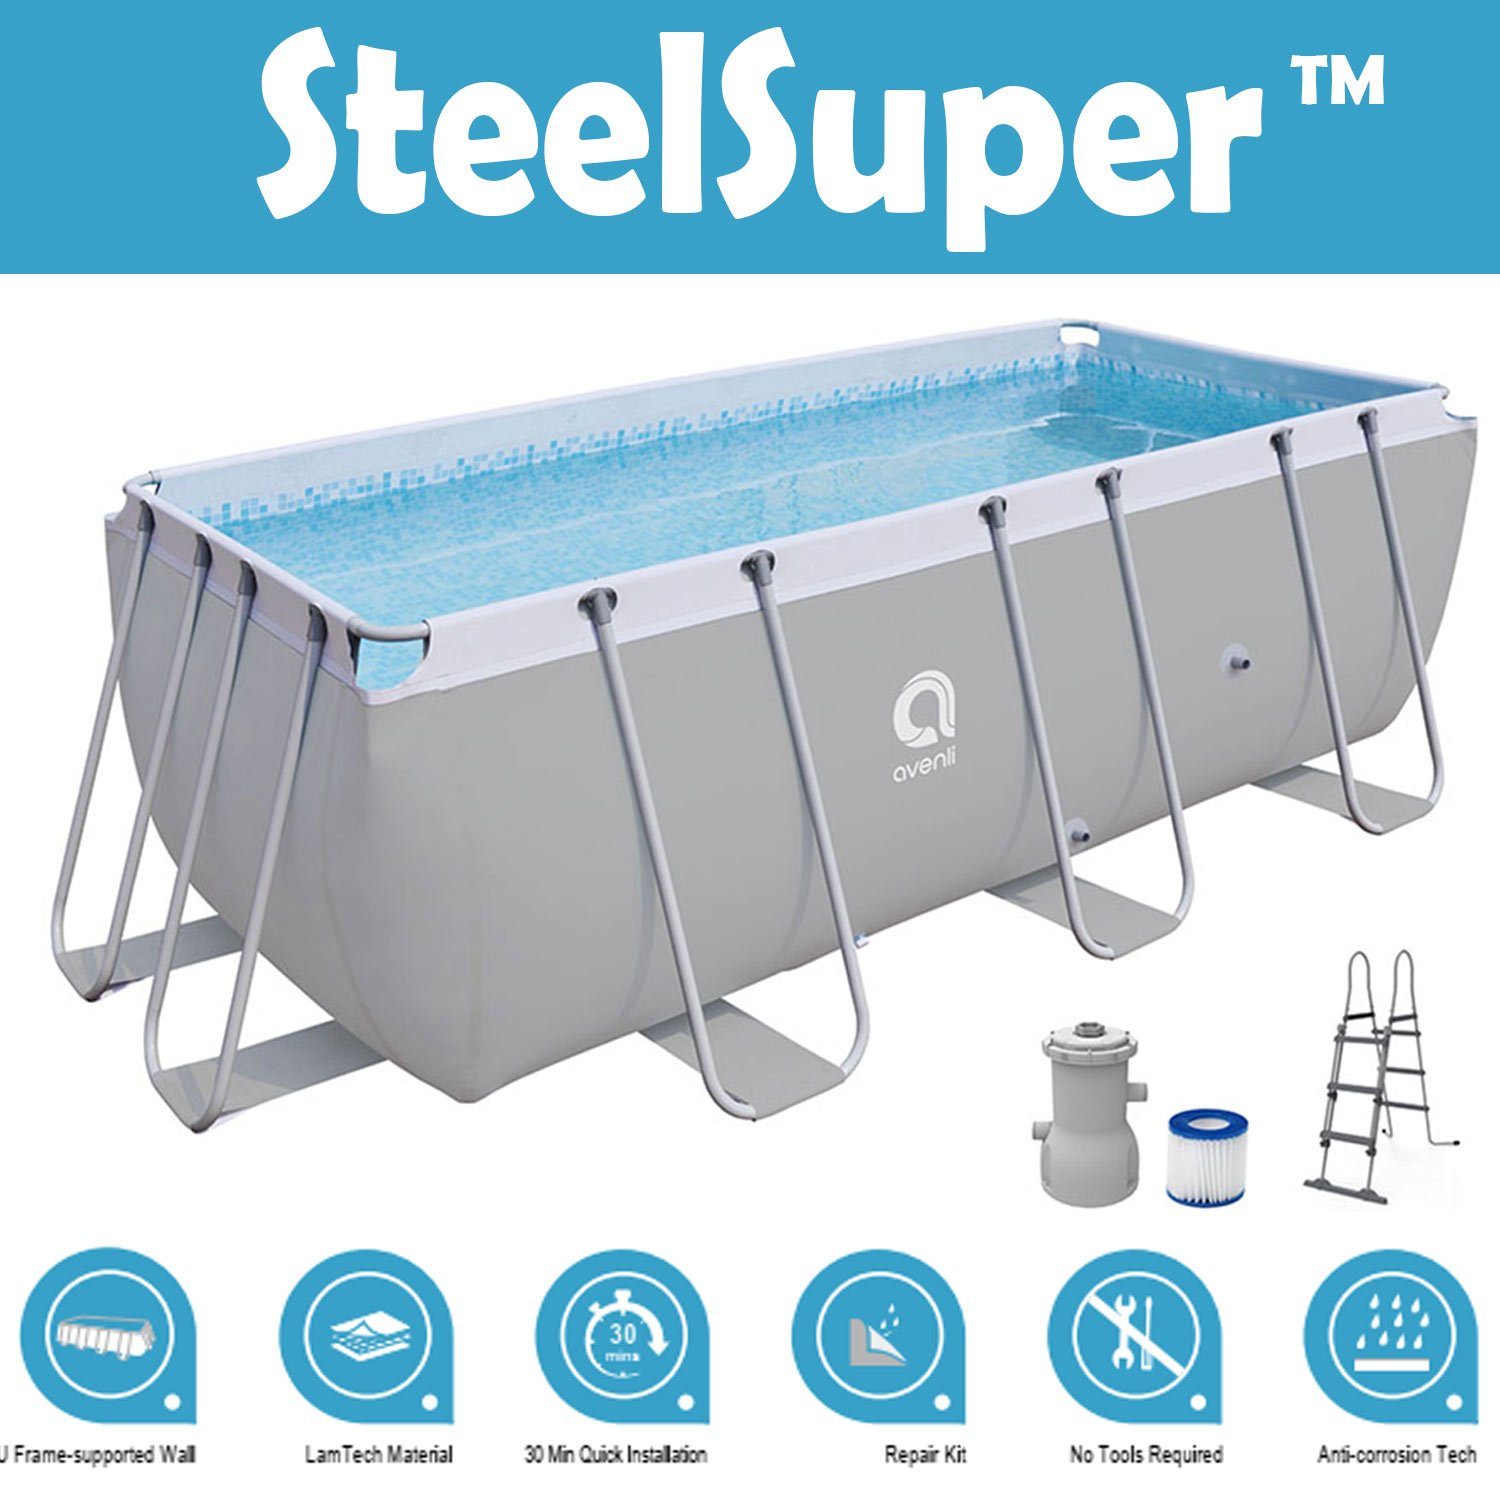 Avenli Pool Steel Super ™ Frame Pool Komplett-Set